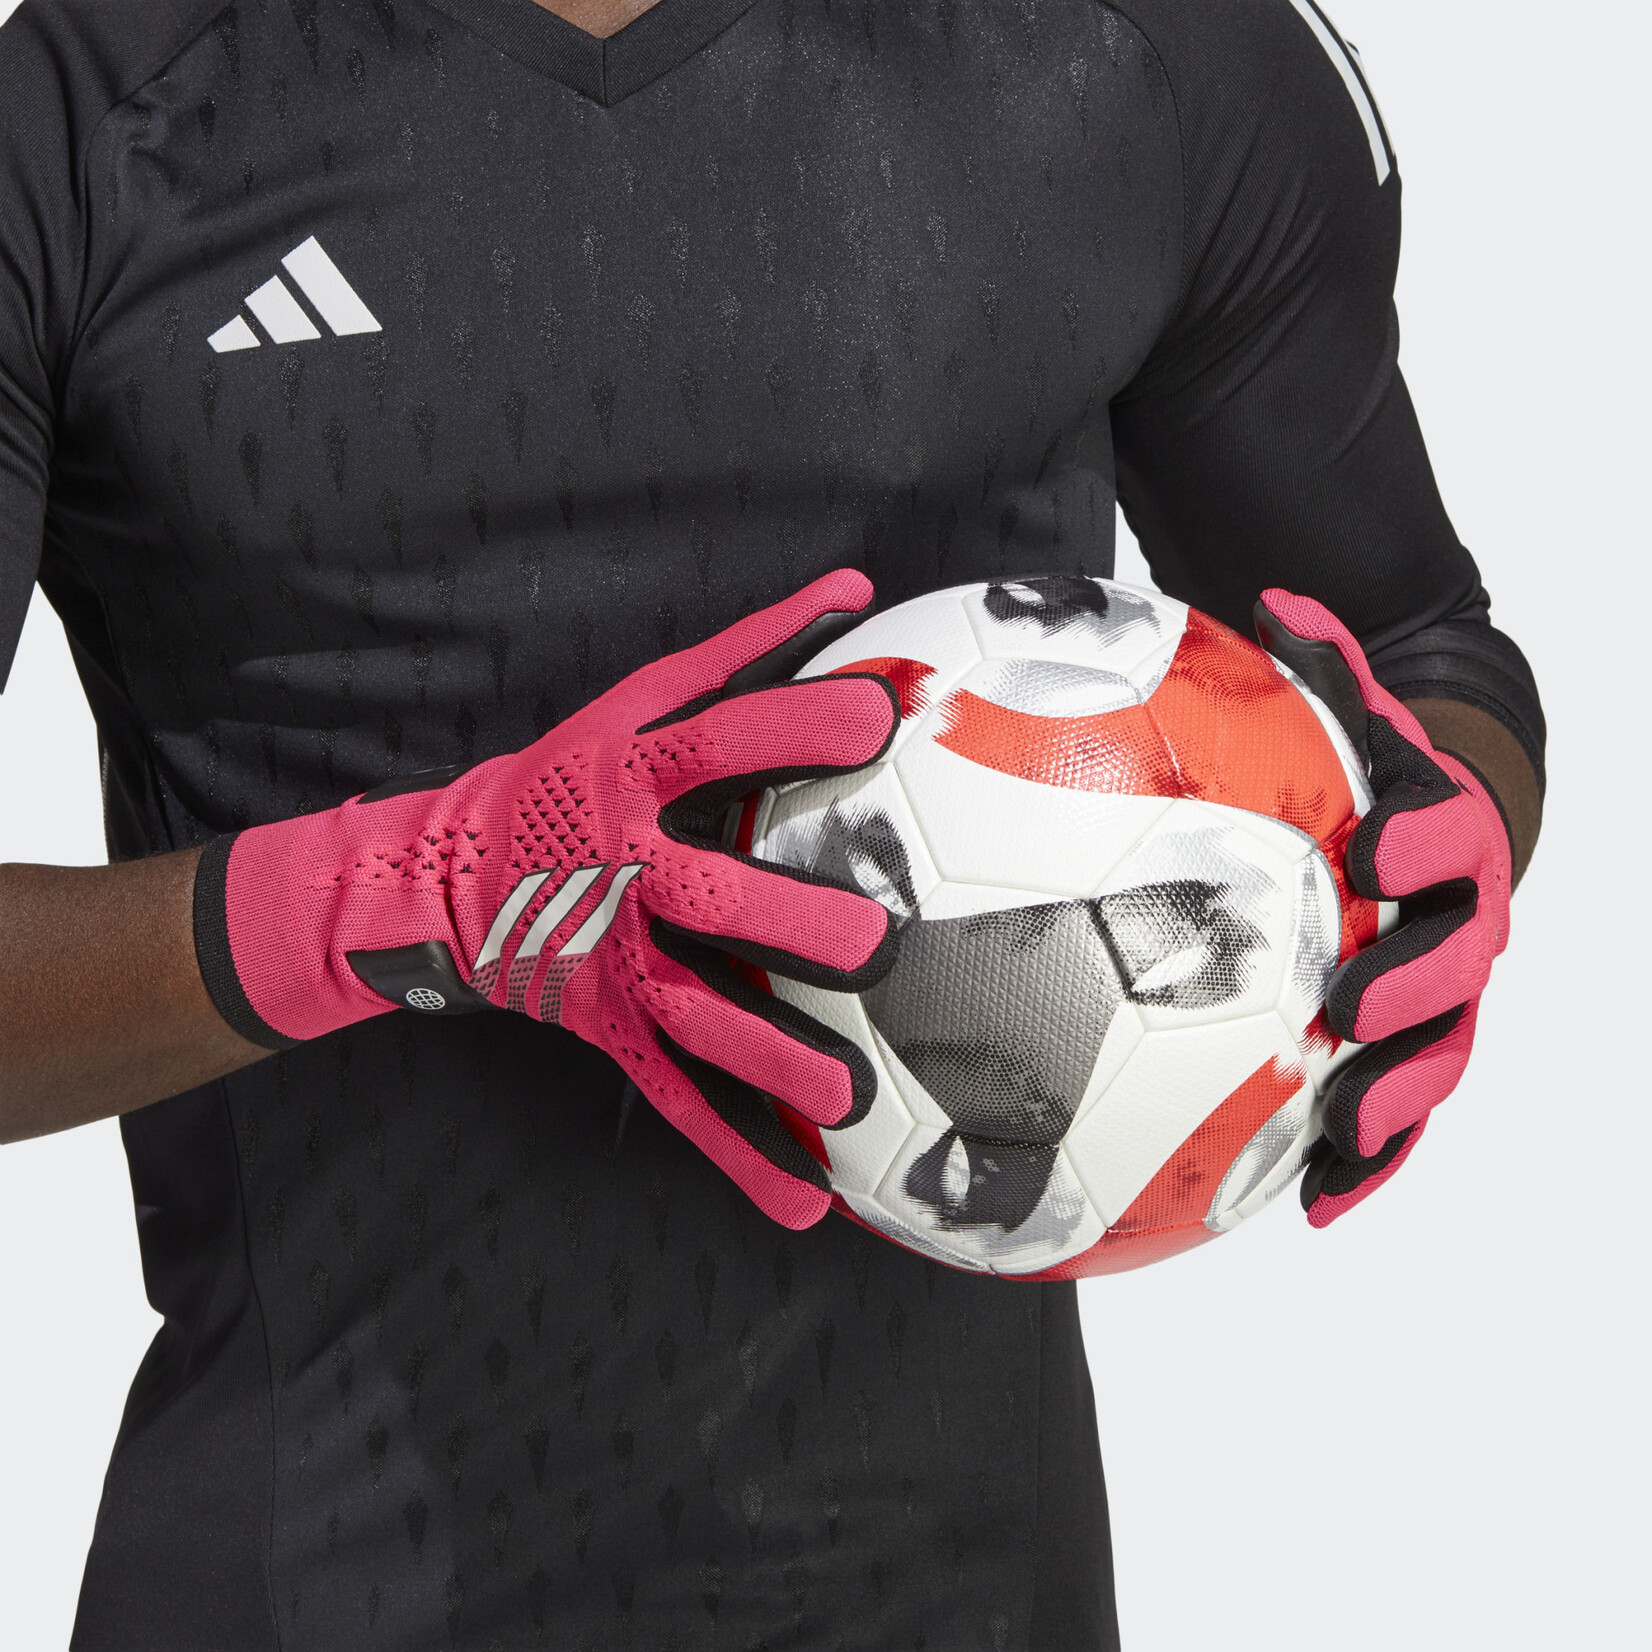 Adidas X Speedportal Pro Goalkeeper Gloves Pink/Black